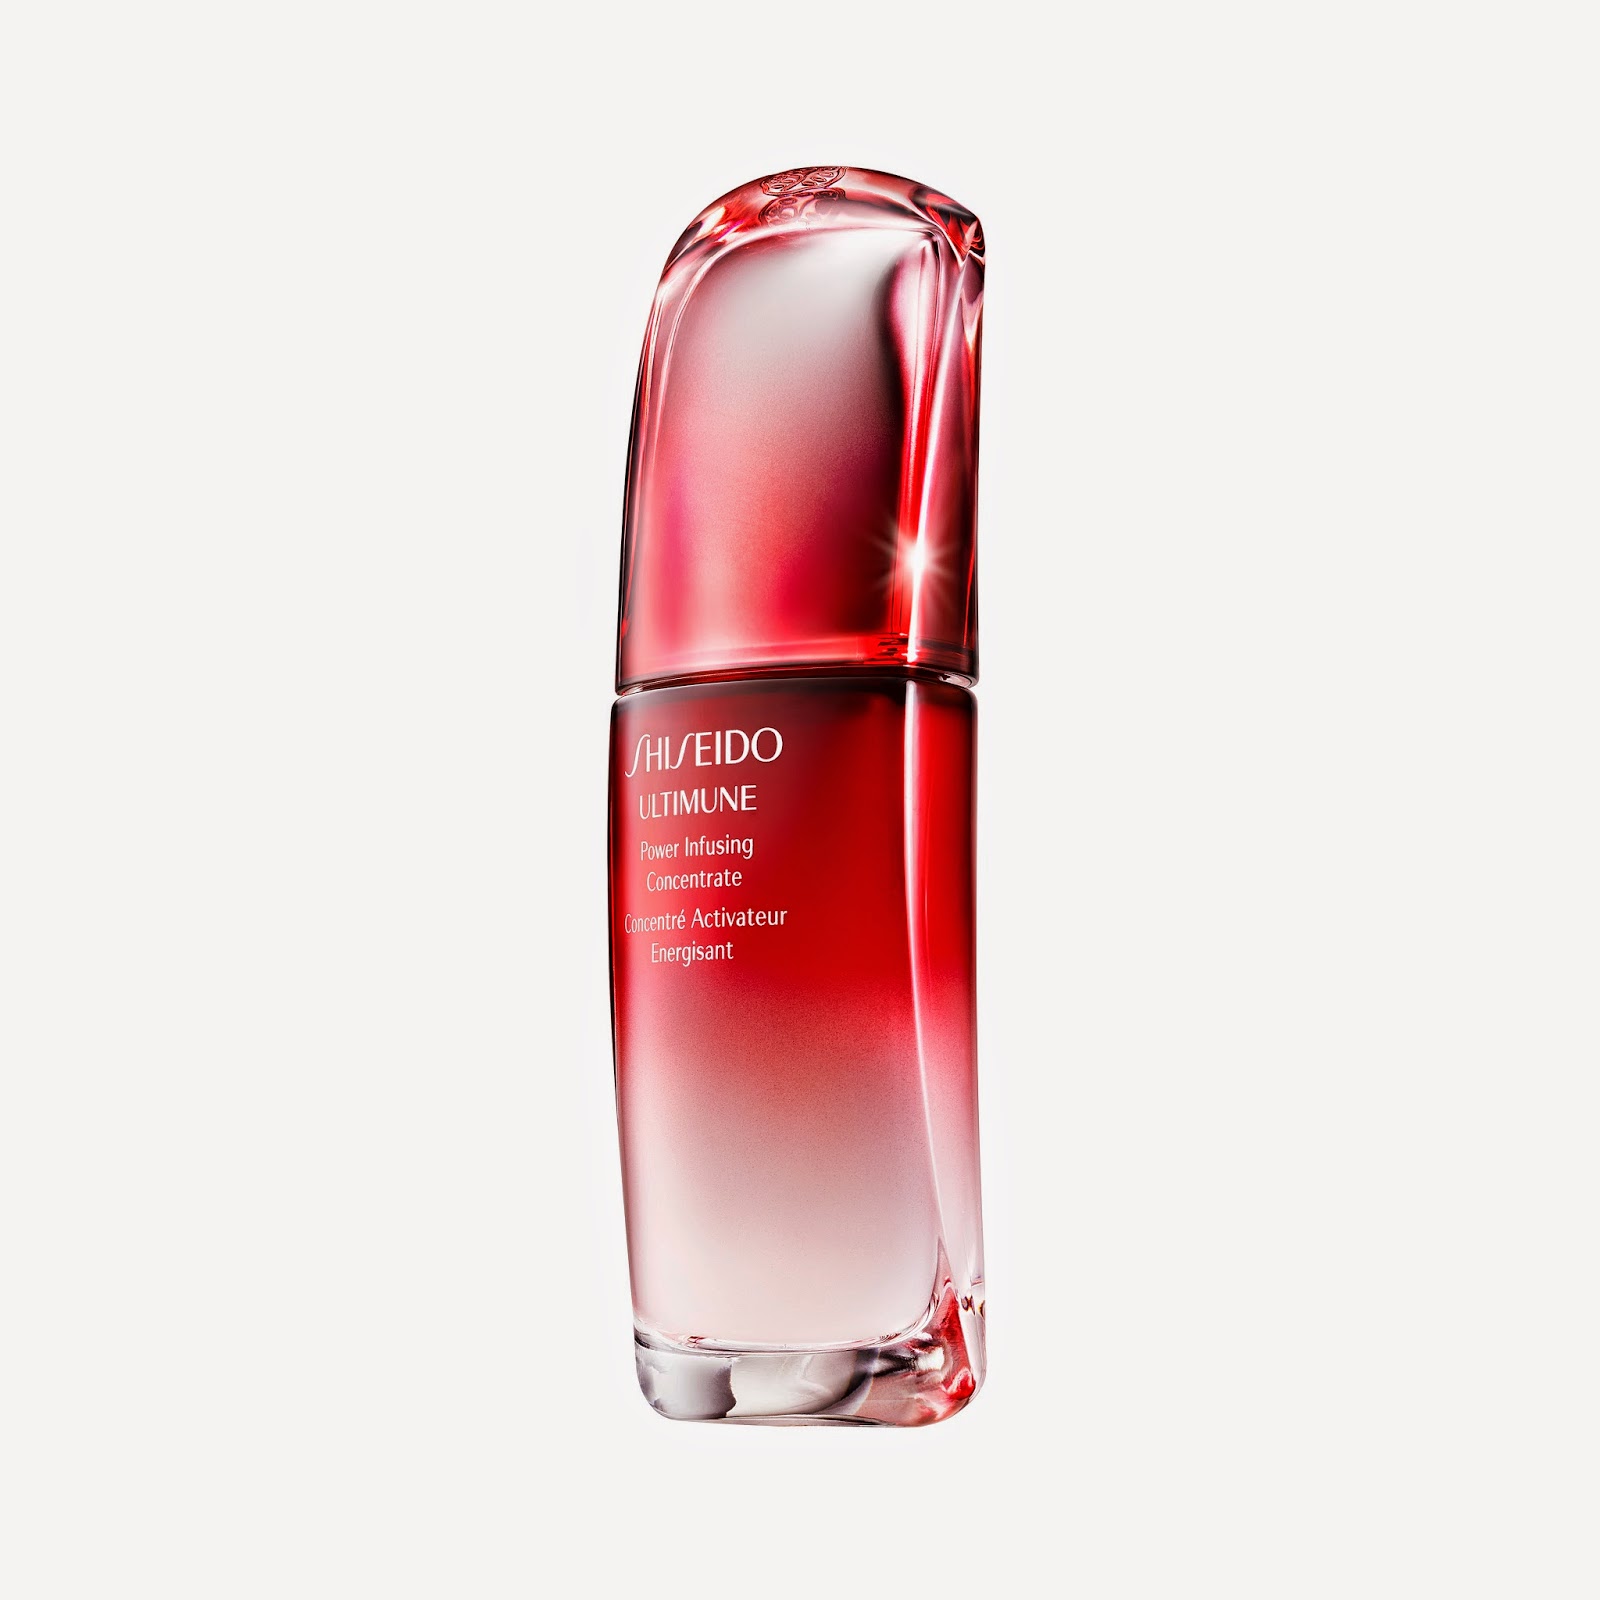 Shiseido Ultimune концентрат. Шисейдо ультимейт. Shiseido Ultimate Power infusing. Shiseido Ultimate Power infusing Concentrate.